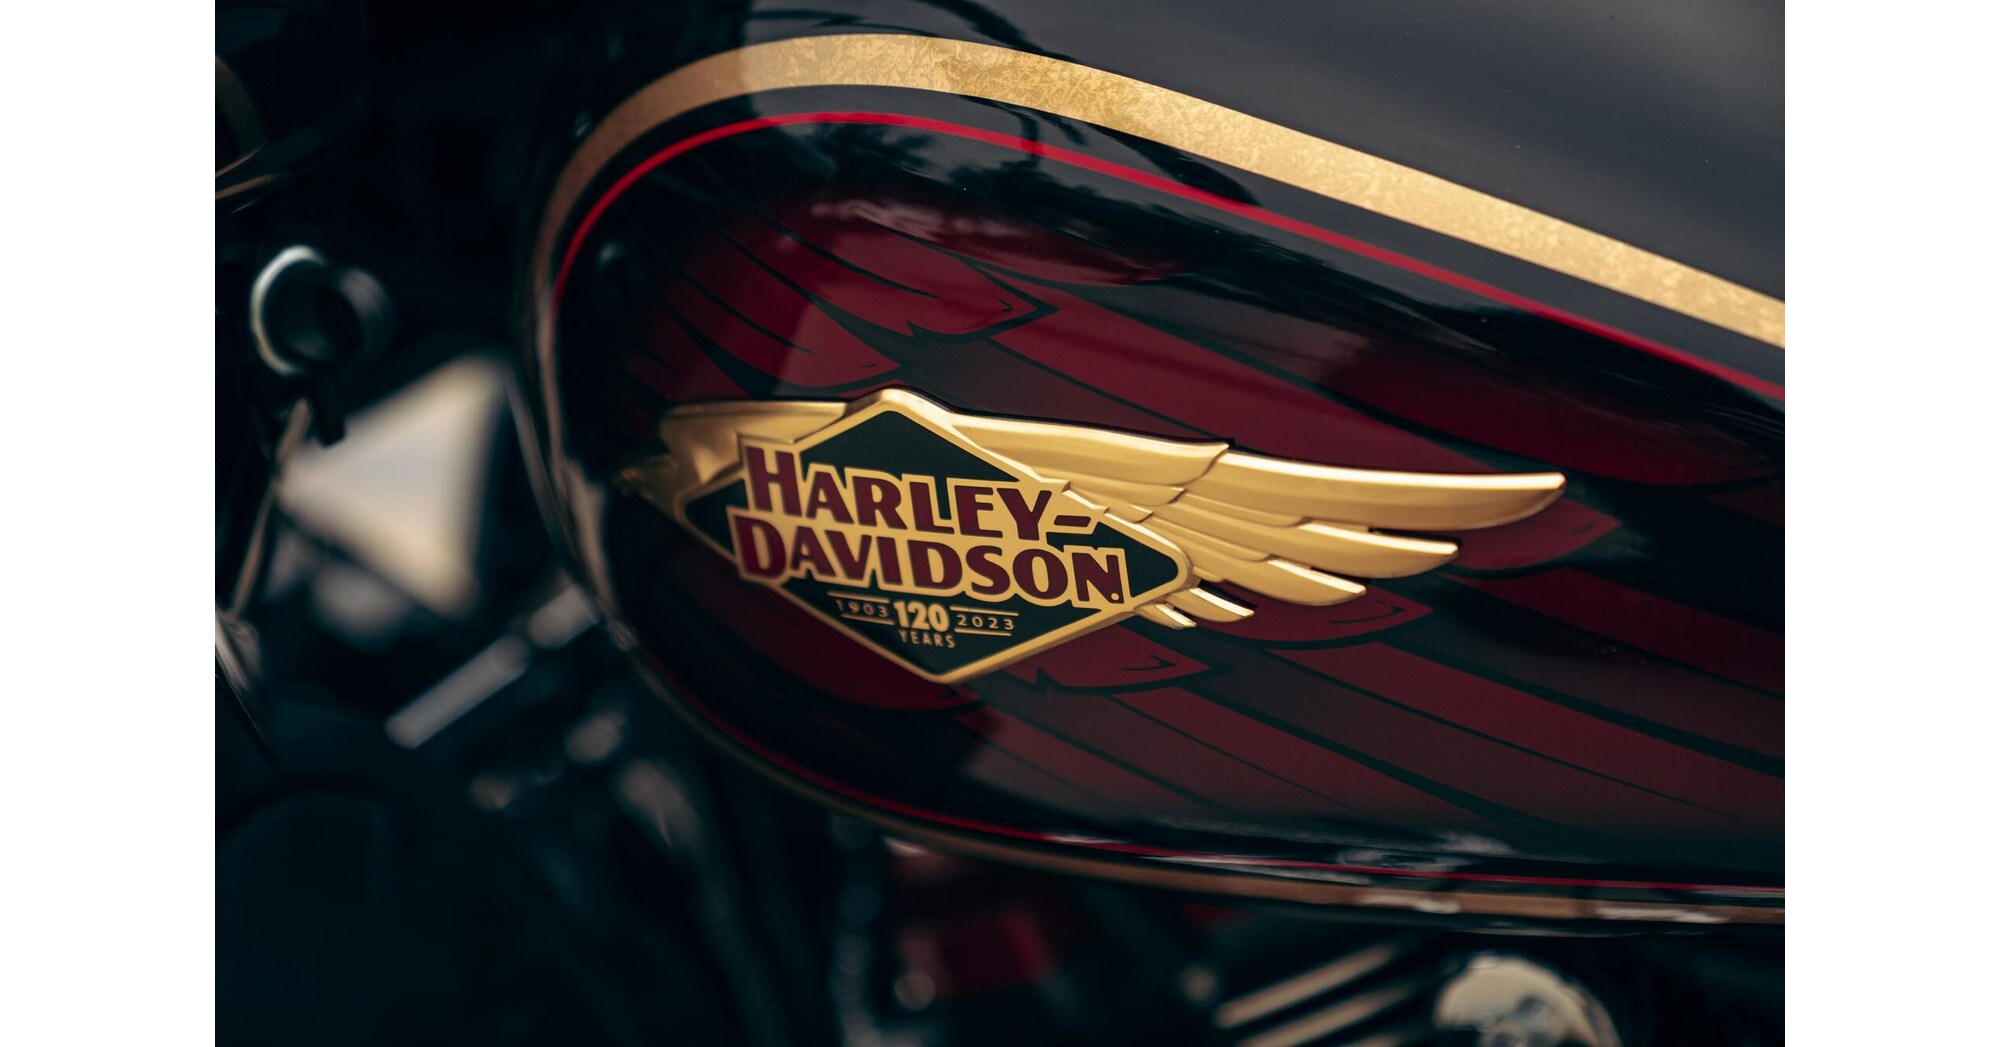 https://mma.prnewswire.com/media/1985578/Limited_Anniversary_model_Harley_Davidson.jpg?p=facebook